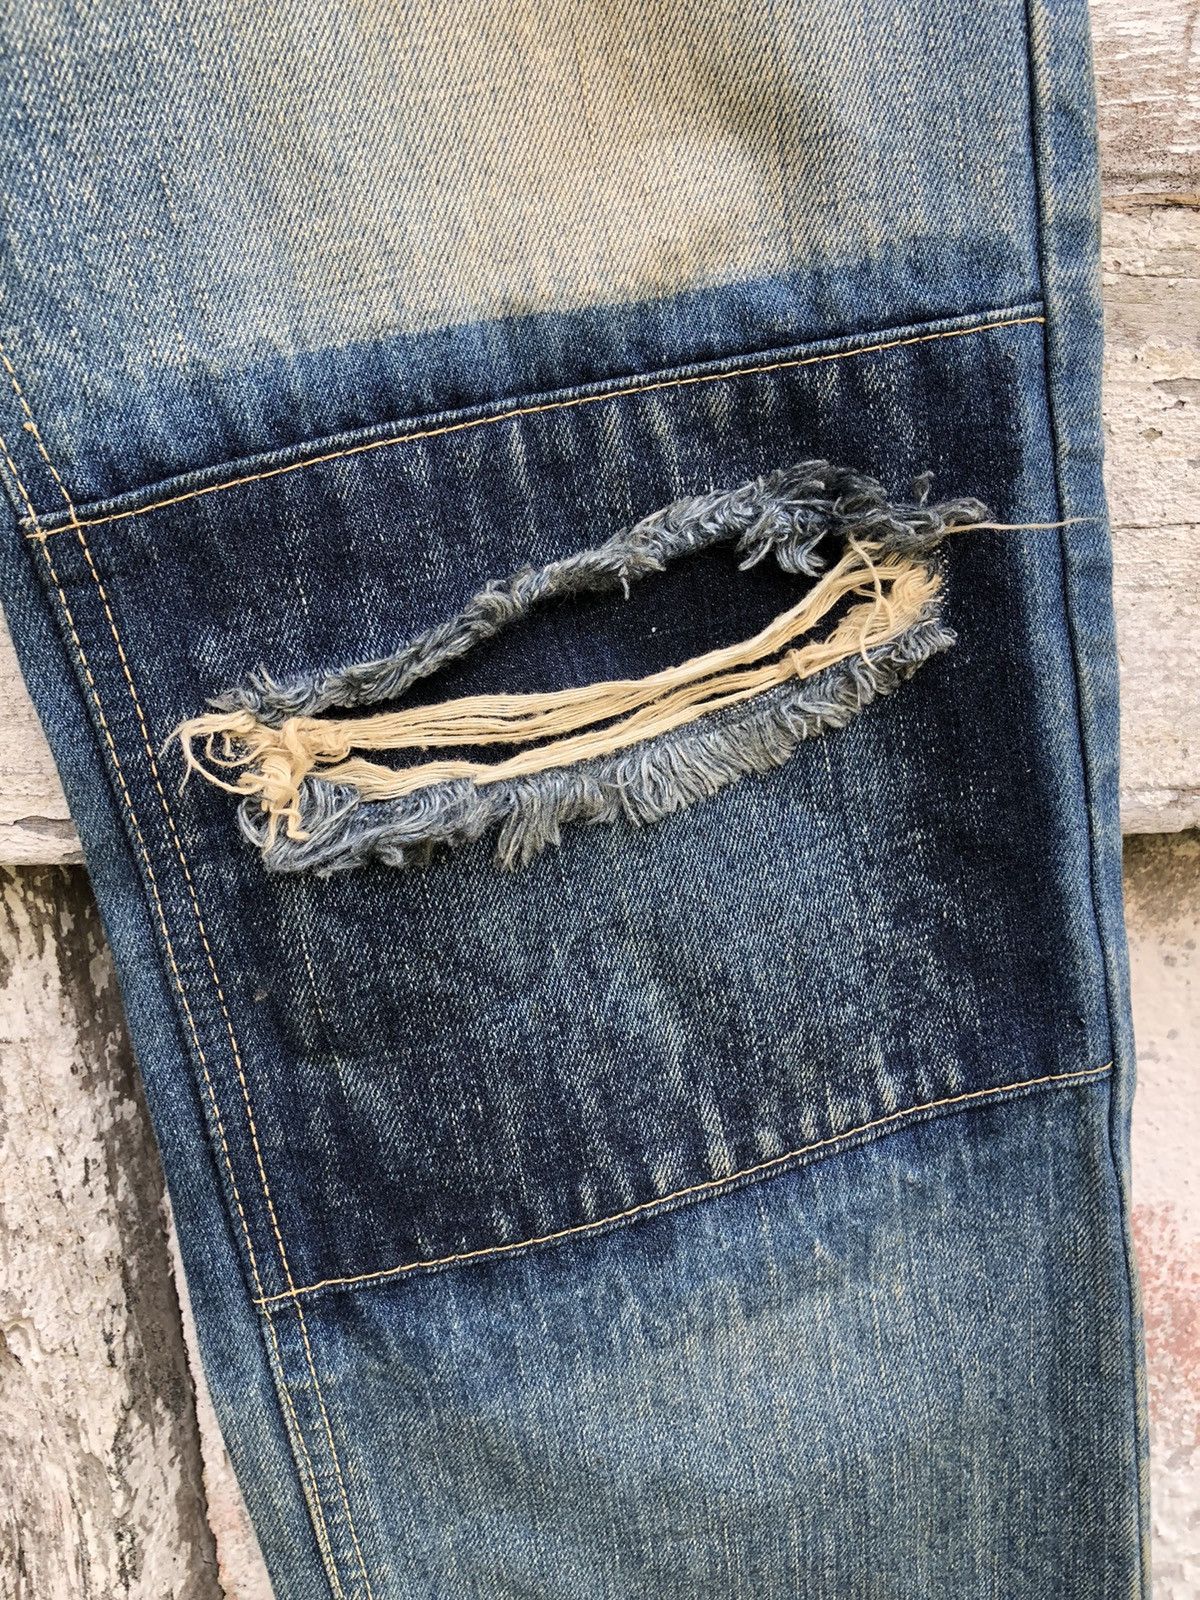 💯Felir💯Discovered Distressed Bush Pocket Pant Jean - 6